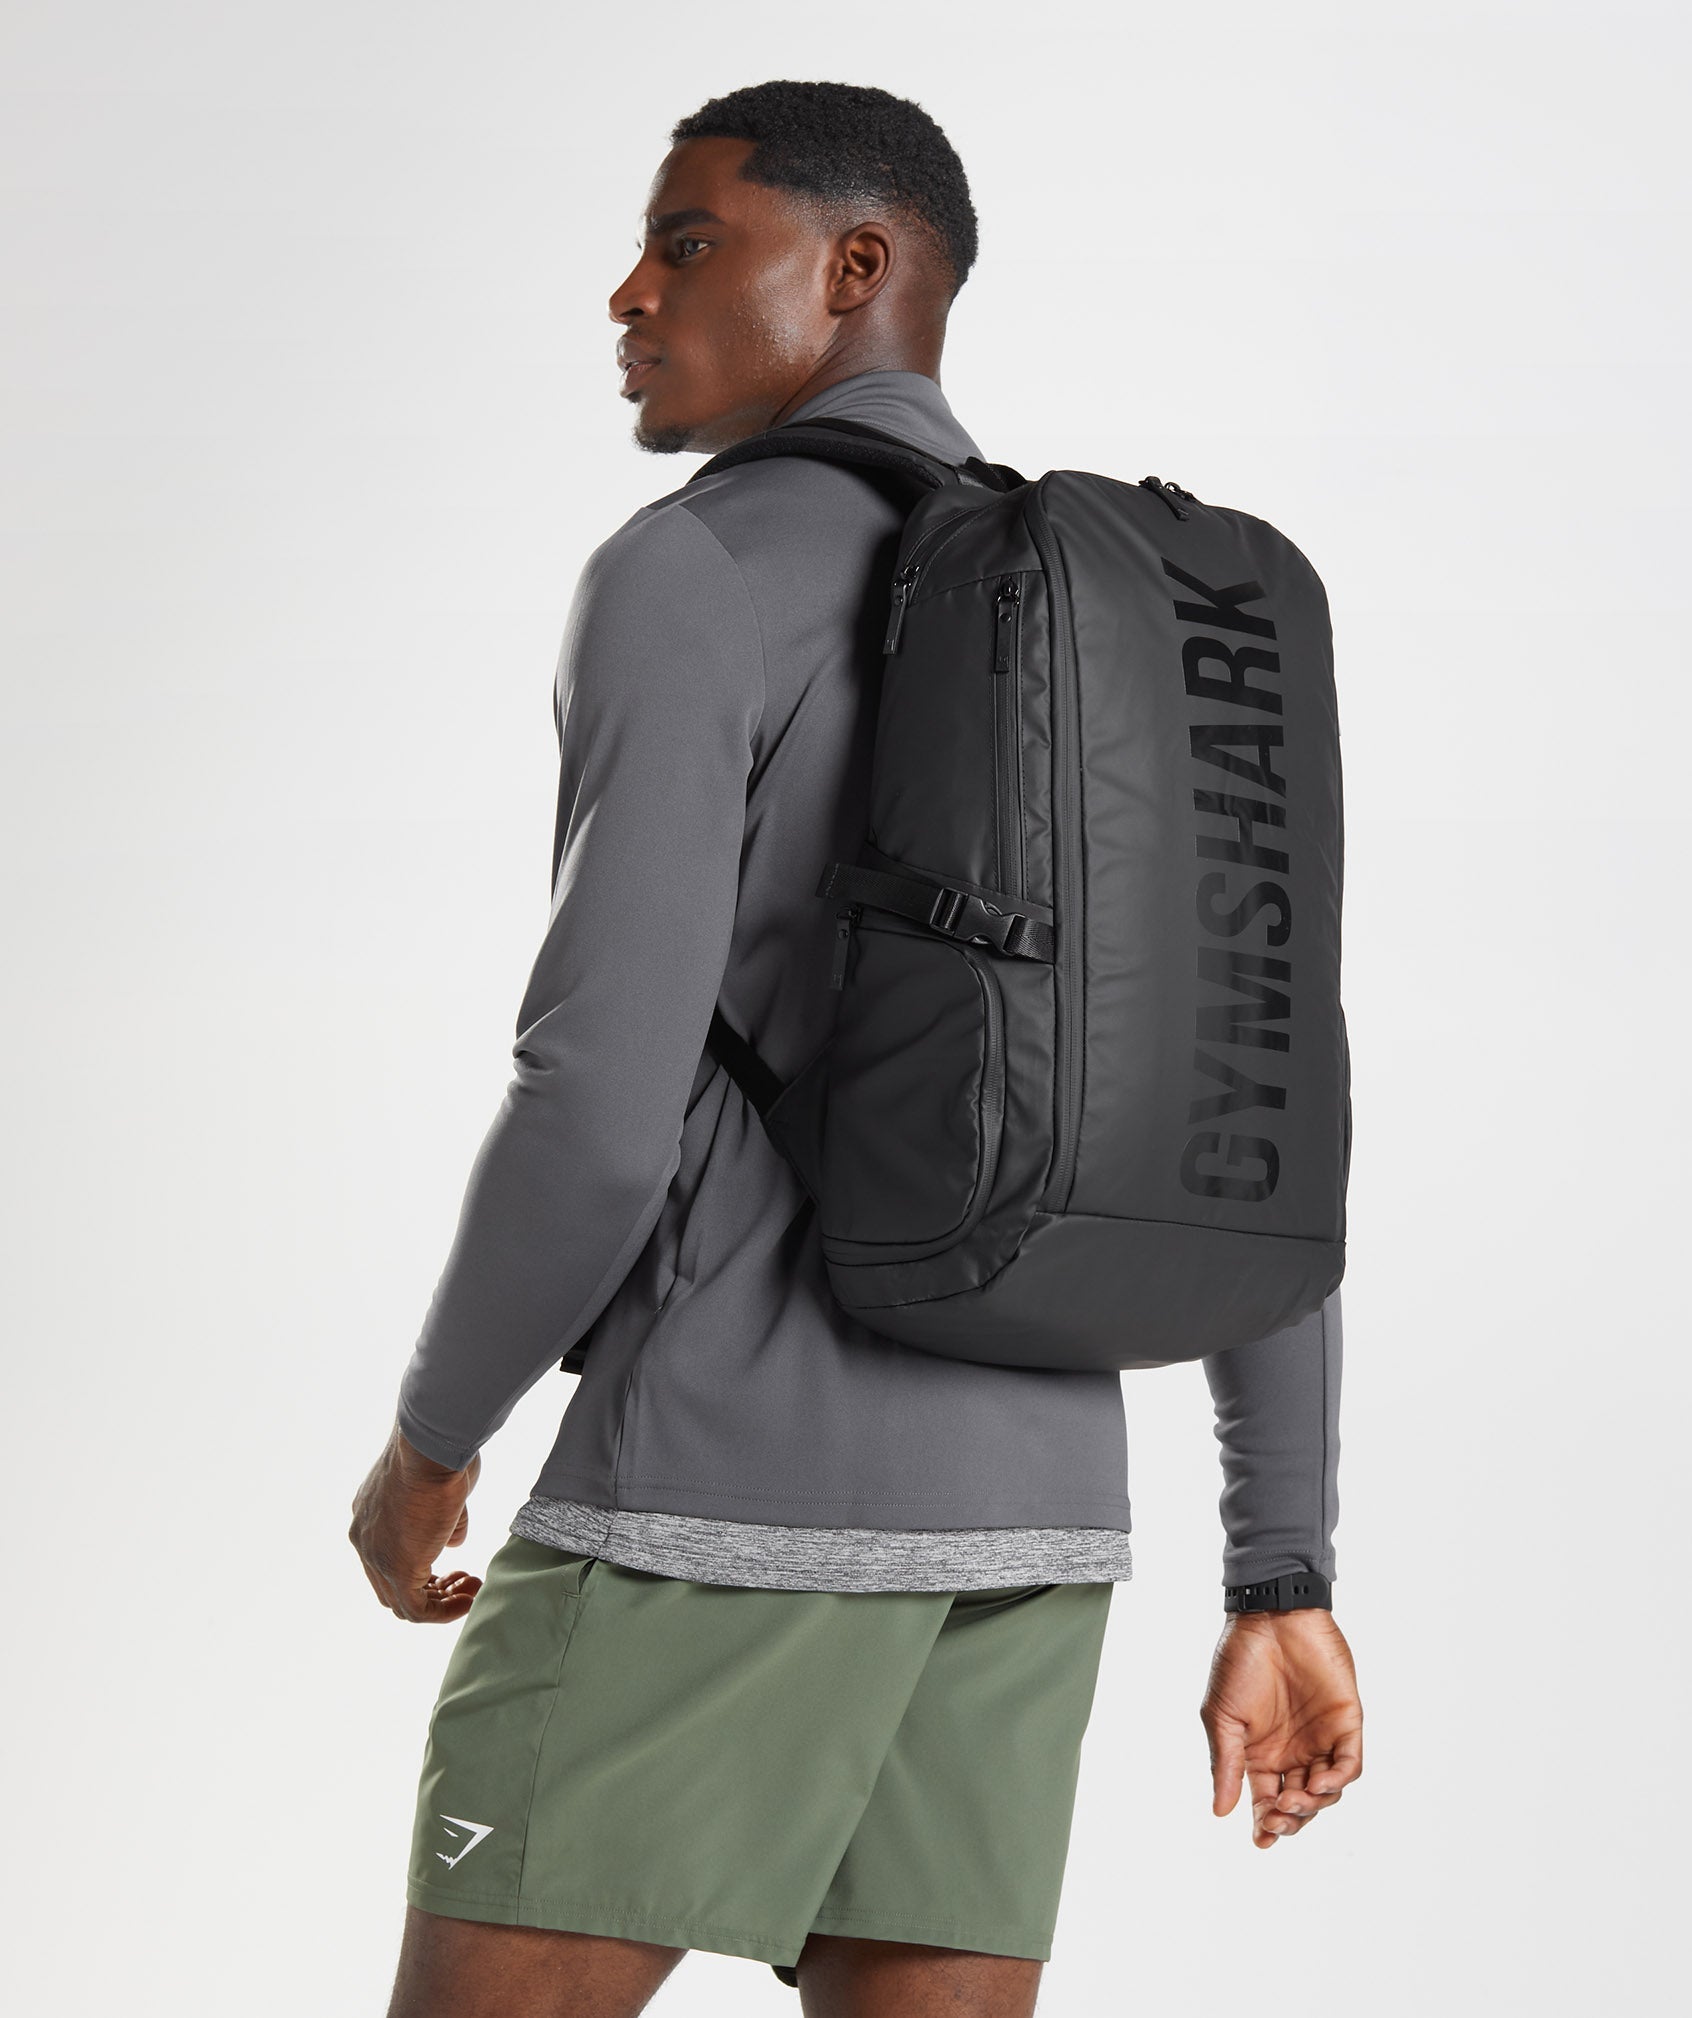 X-Series 0.3 Backpack in Black - view 5